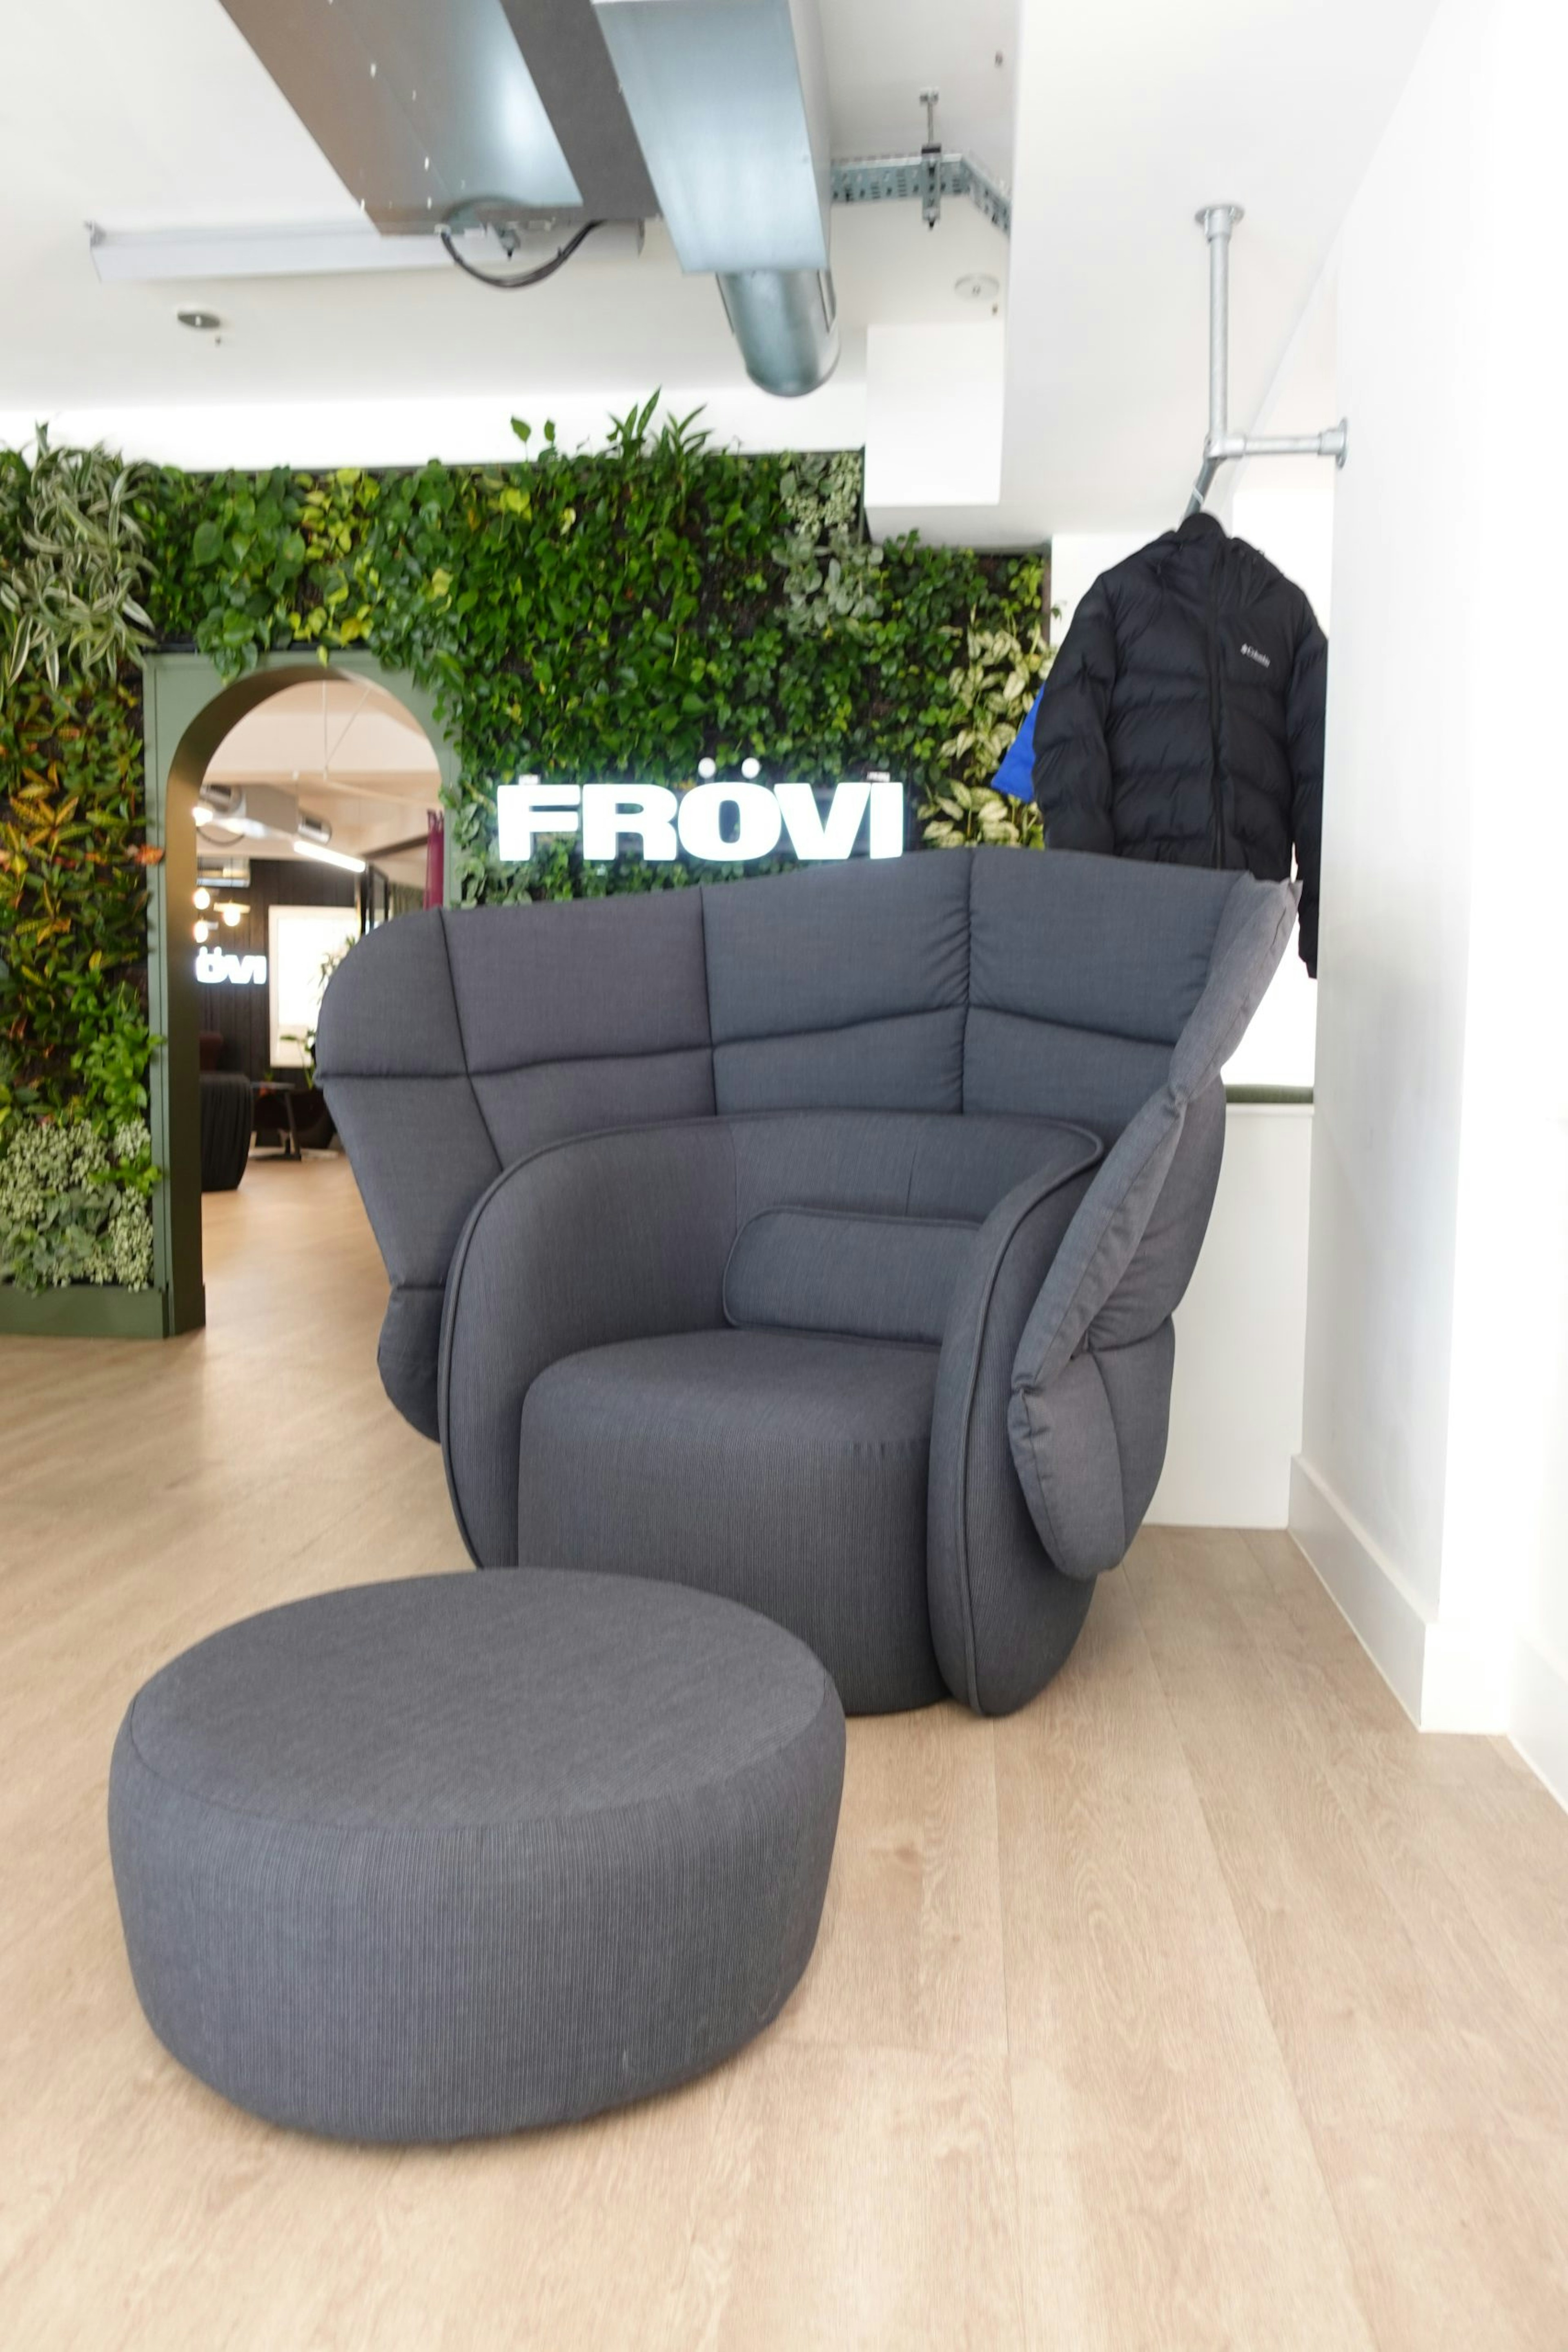 Frovi Fuffa Chair - London Showroom